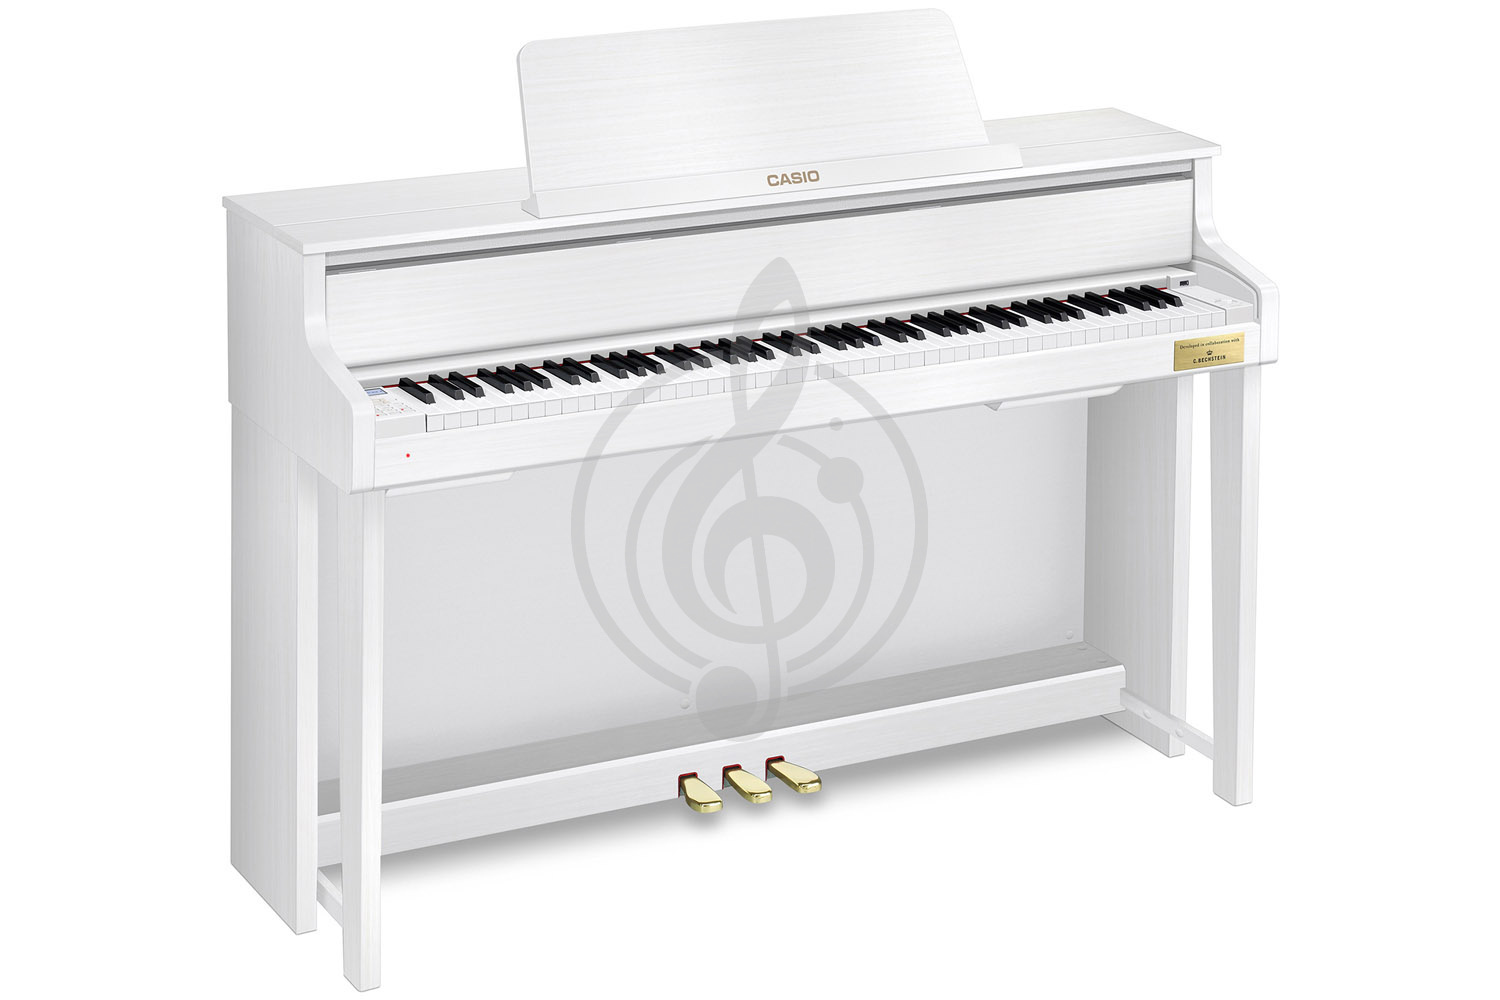 Цифровое пианино Цифровые пианино Casio Casio GP-300WE - цифровое пианино серии Grand Hybrid GP-300WE - фото 1